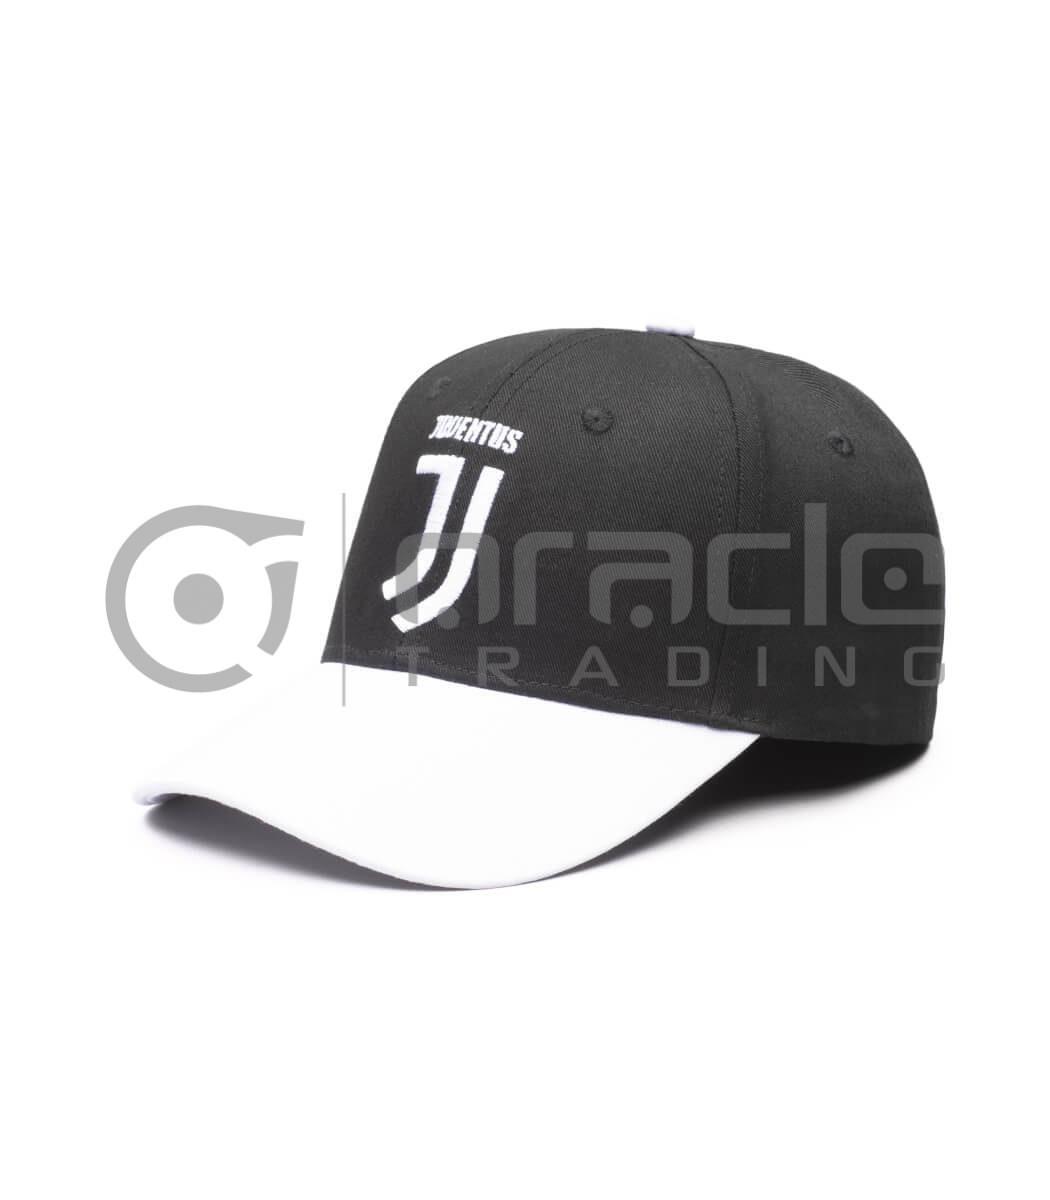 Juventus Crest Hat - White